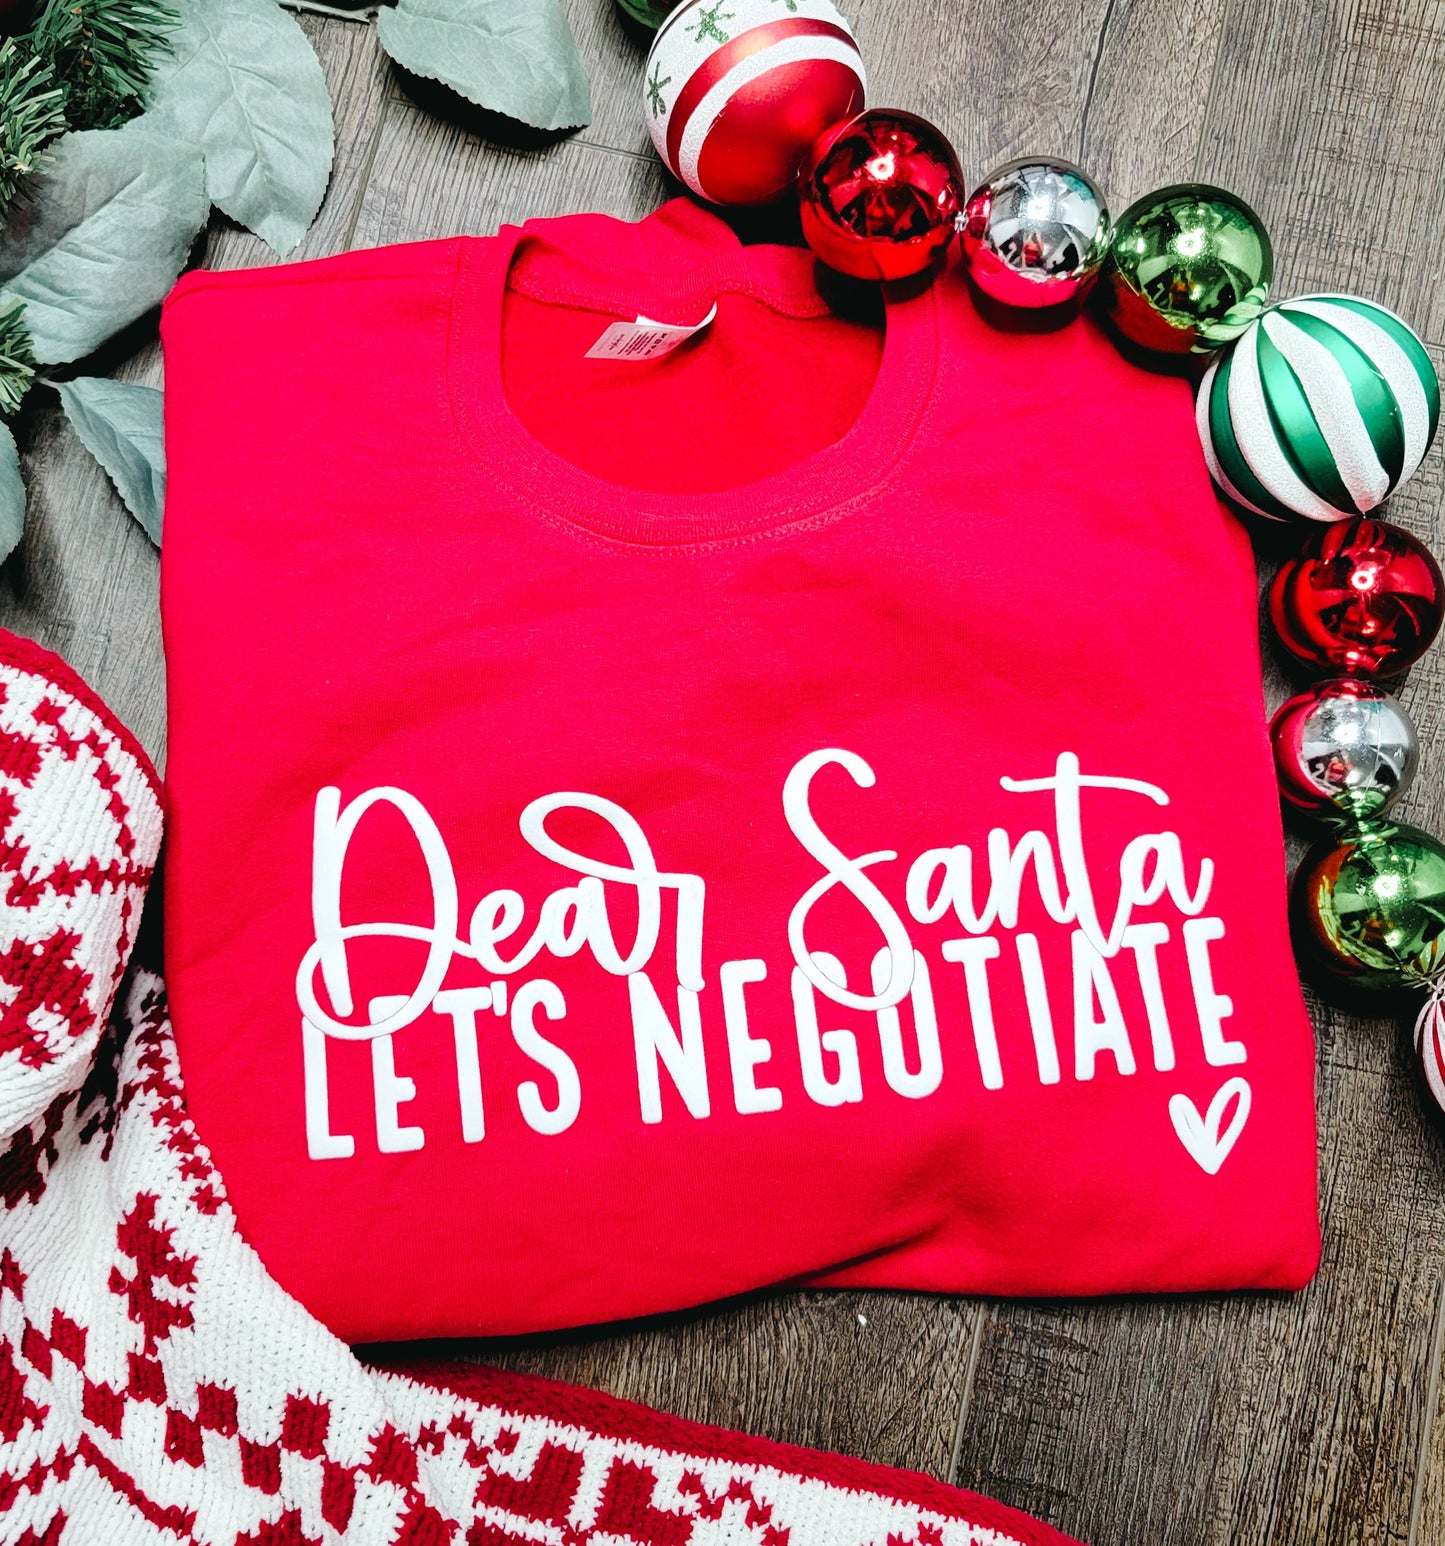 Dear Santa Let's Negotiate (S-3X)